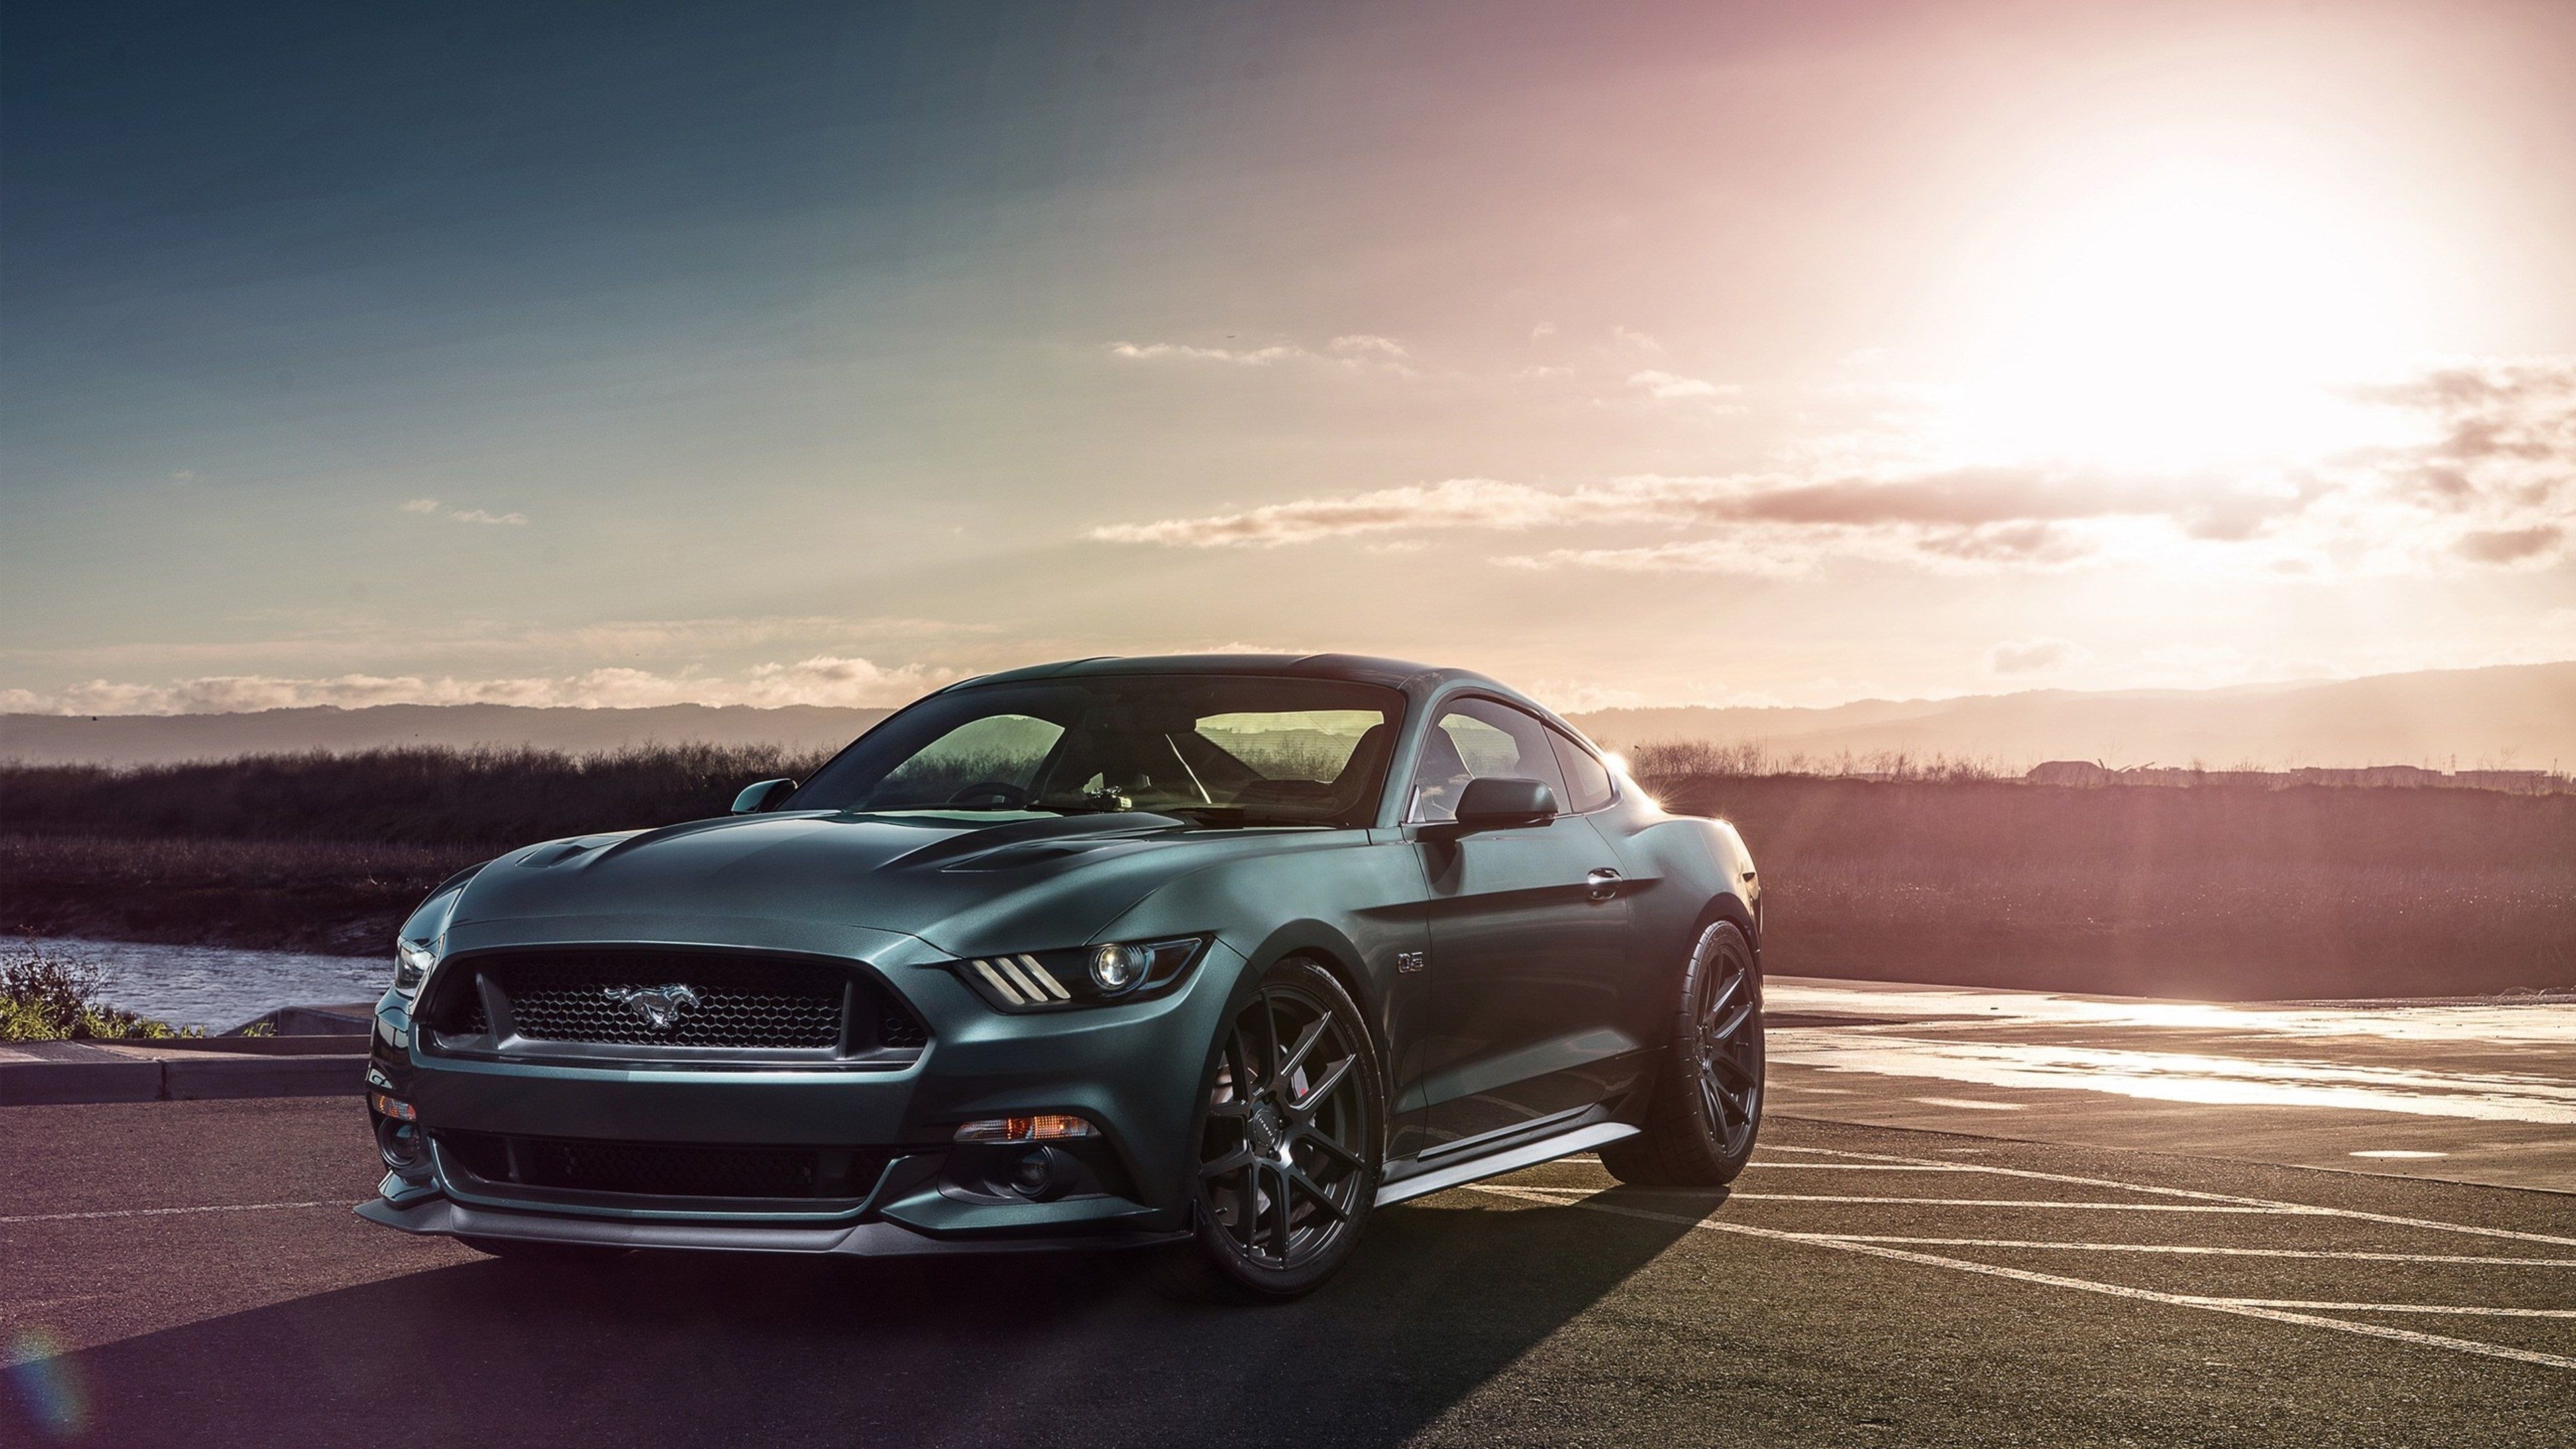 Ford Mustang beauty, Artistic automotive photography, Elegance in motion, Design mastery, V8 engine roar, 3840x2160 4K Desktop